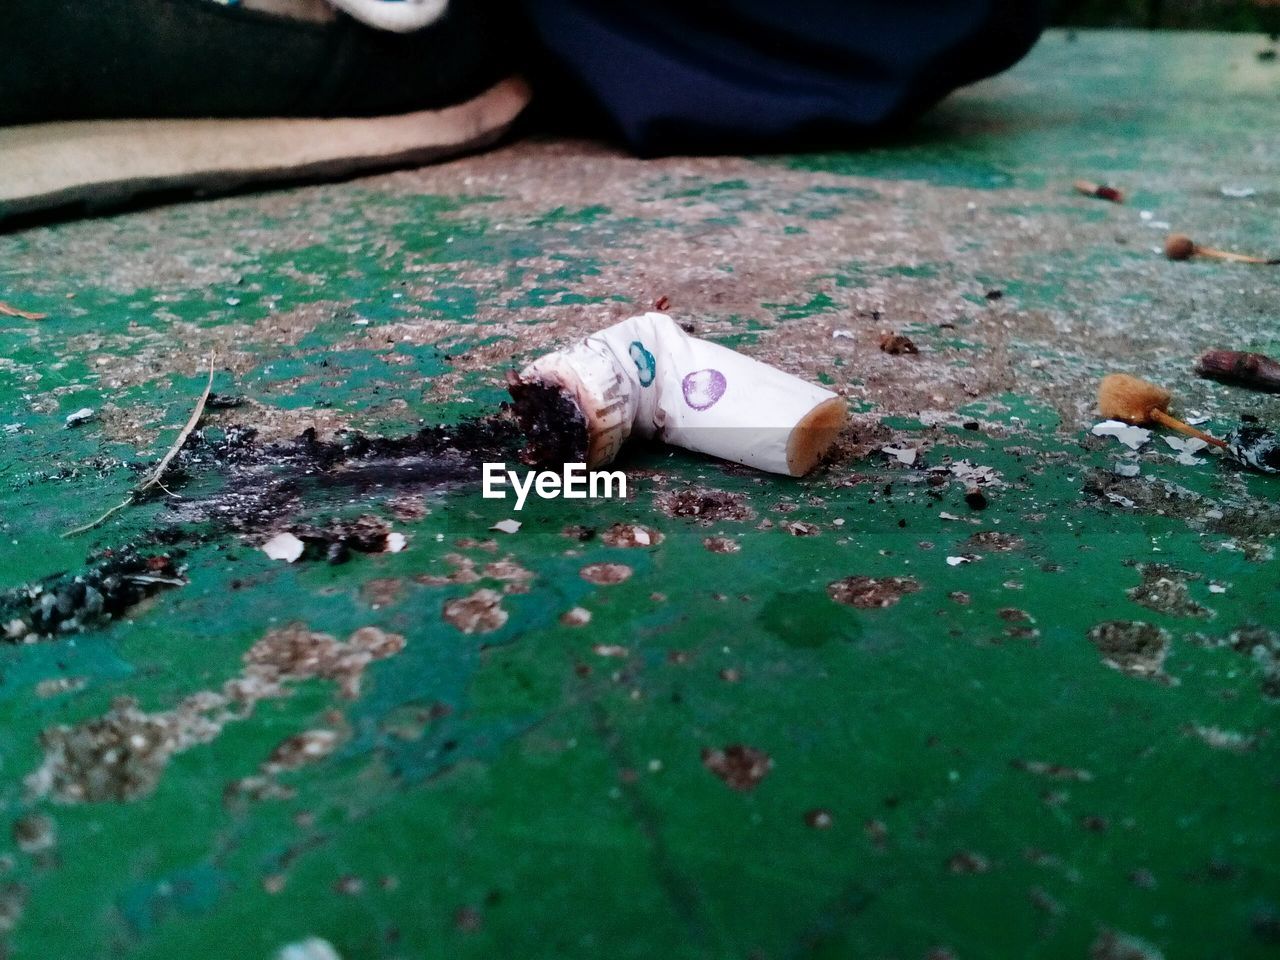 Cigarette butt on footpath